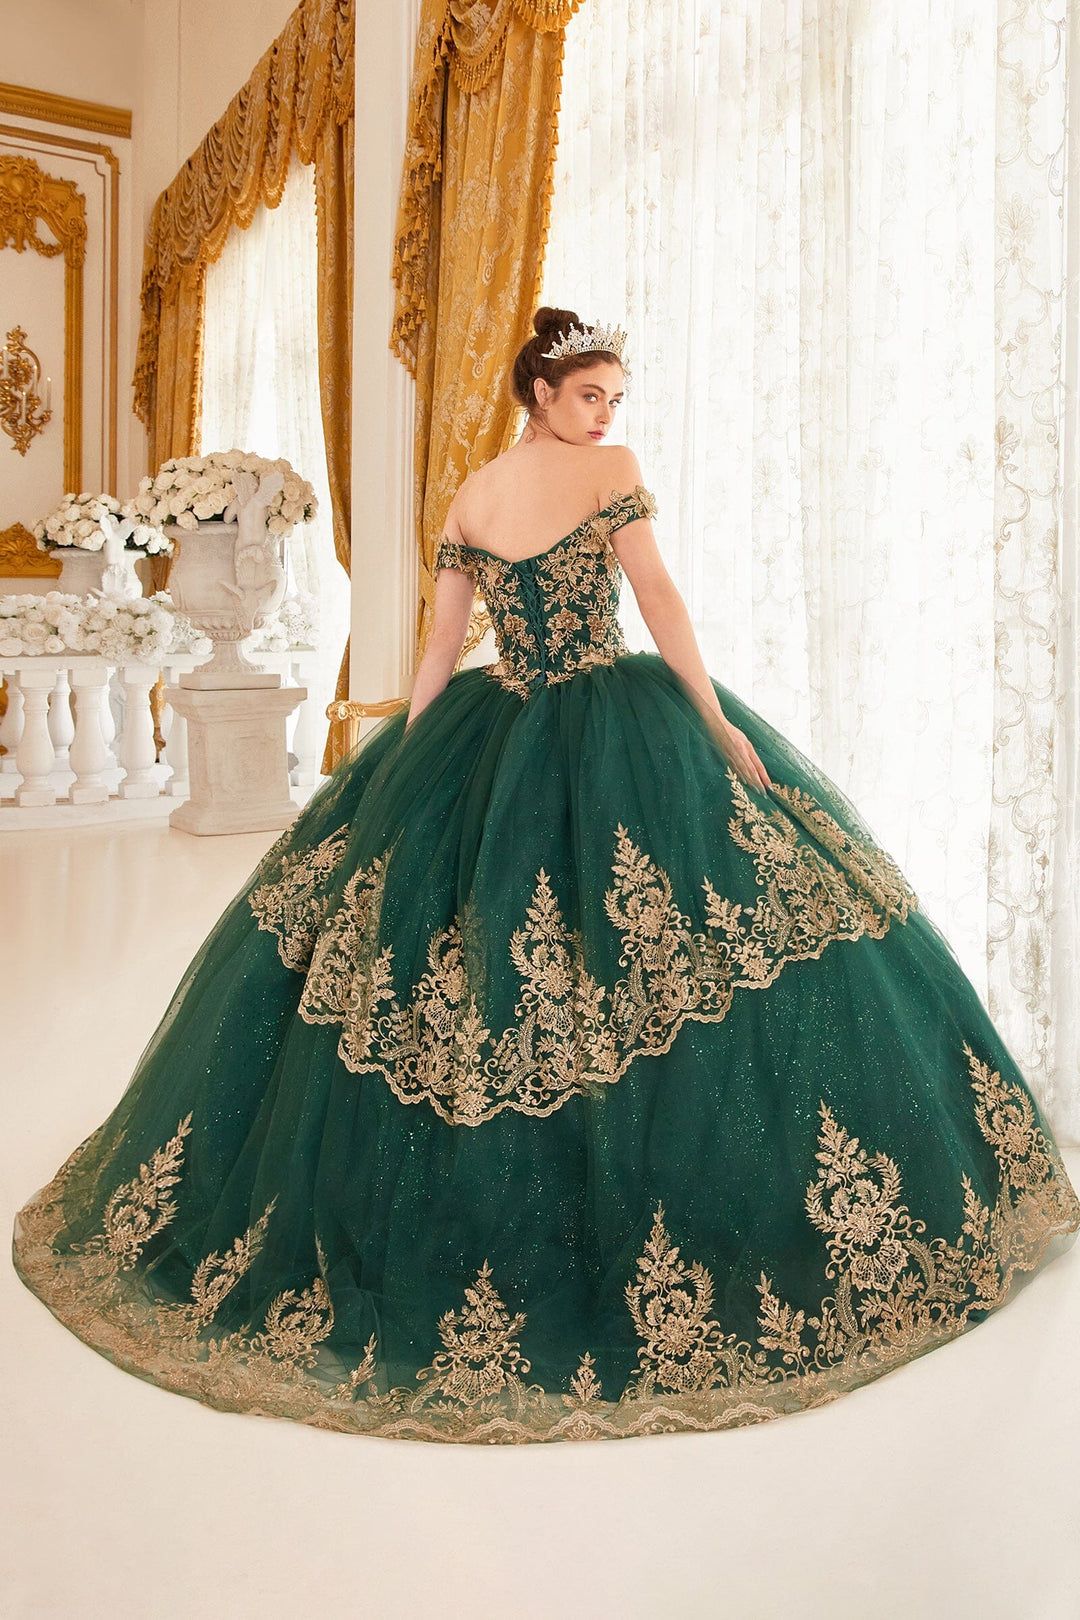 Cinderella Divine 15701 Quinceanera Ball Gown | Quinceanera Dress